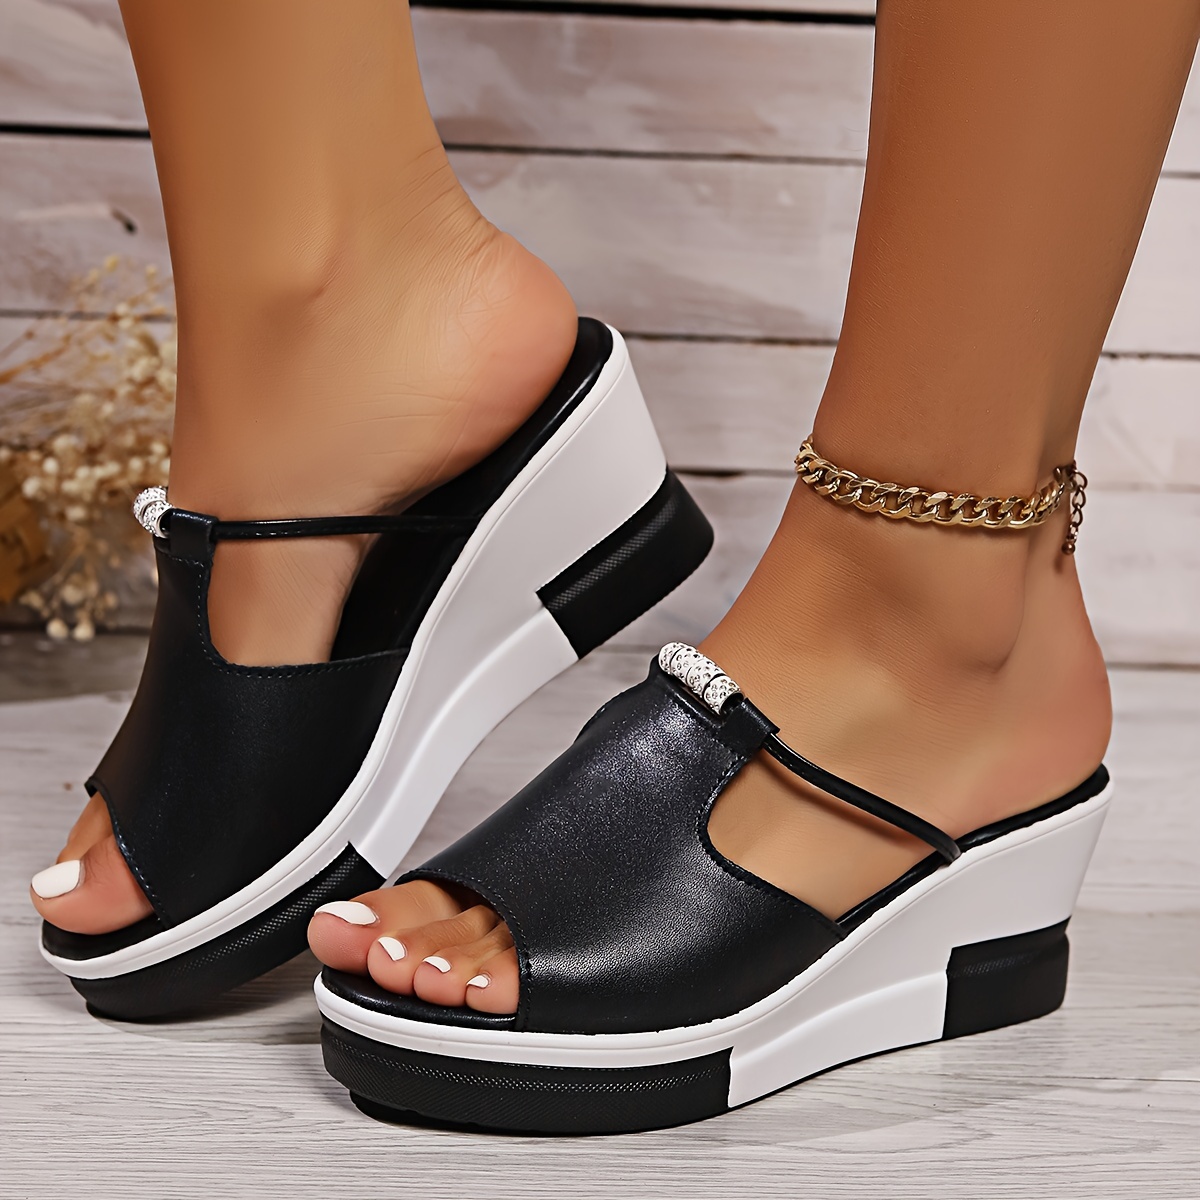 🔥US BEST SELLER🔥 Comfortable Orthopedic Platform Sandals for Women!